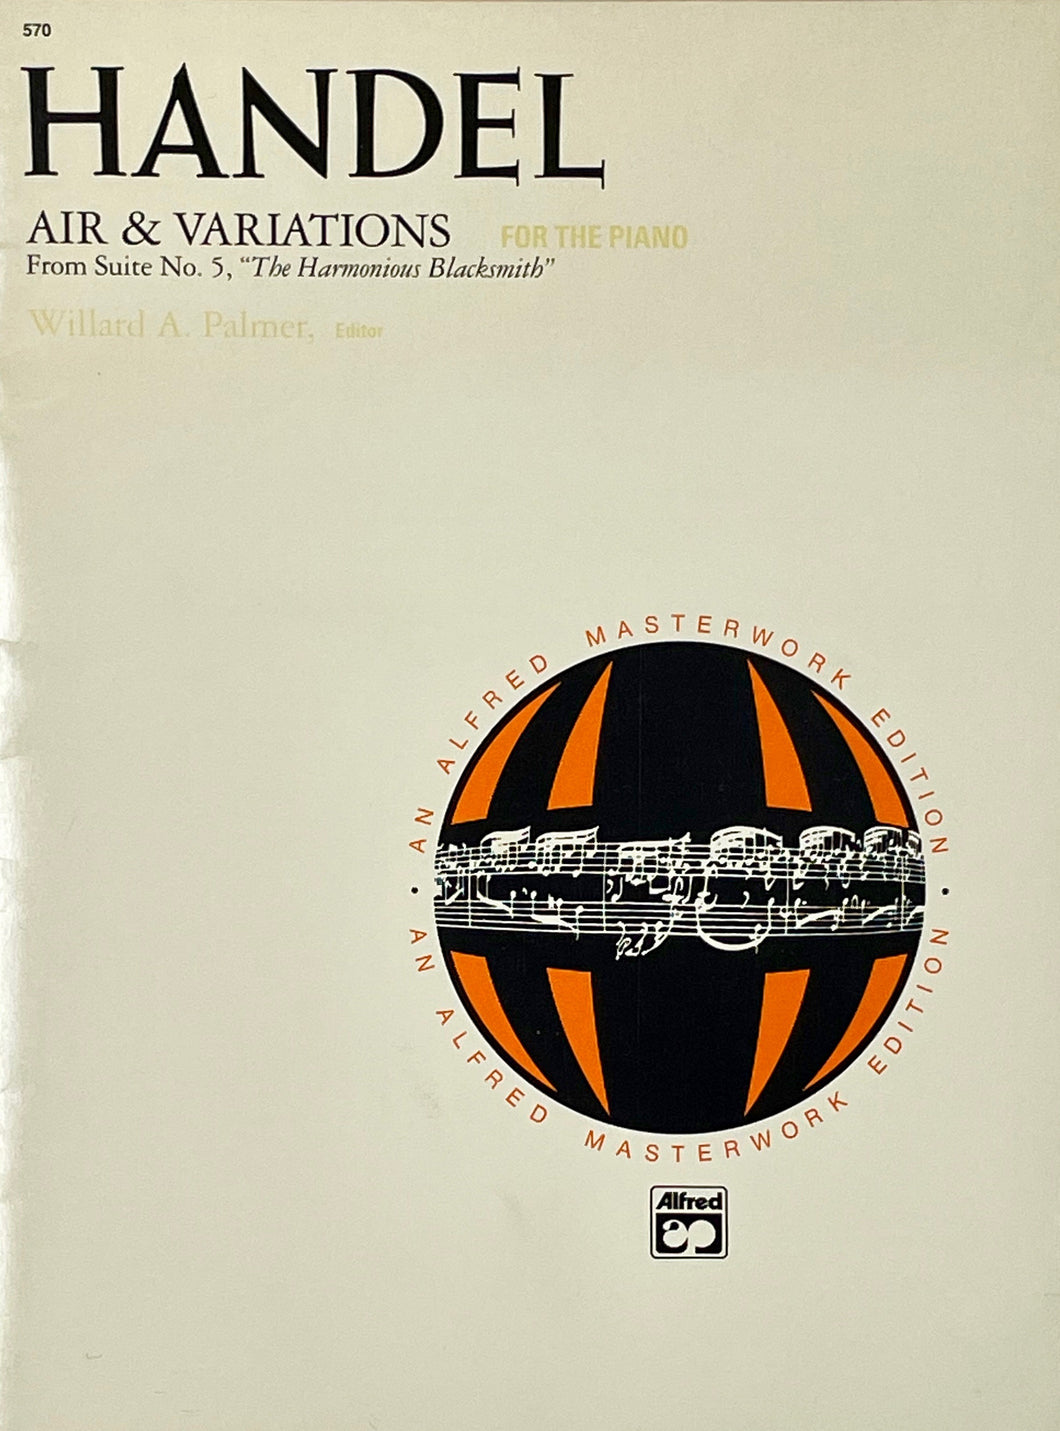 Handel-Harmonious Blacksmith Air & Variations